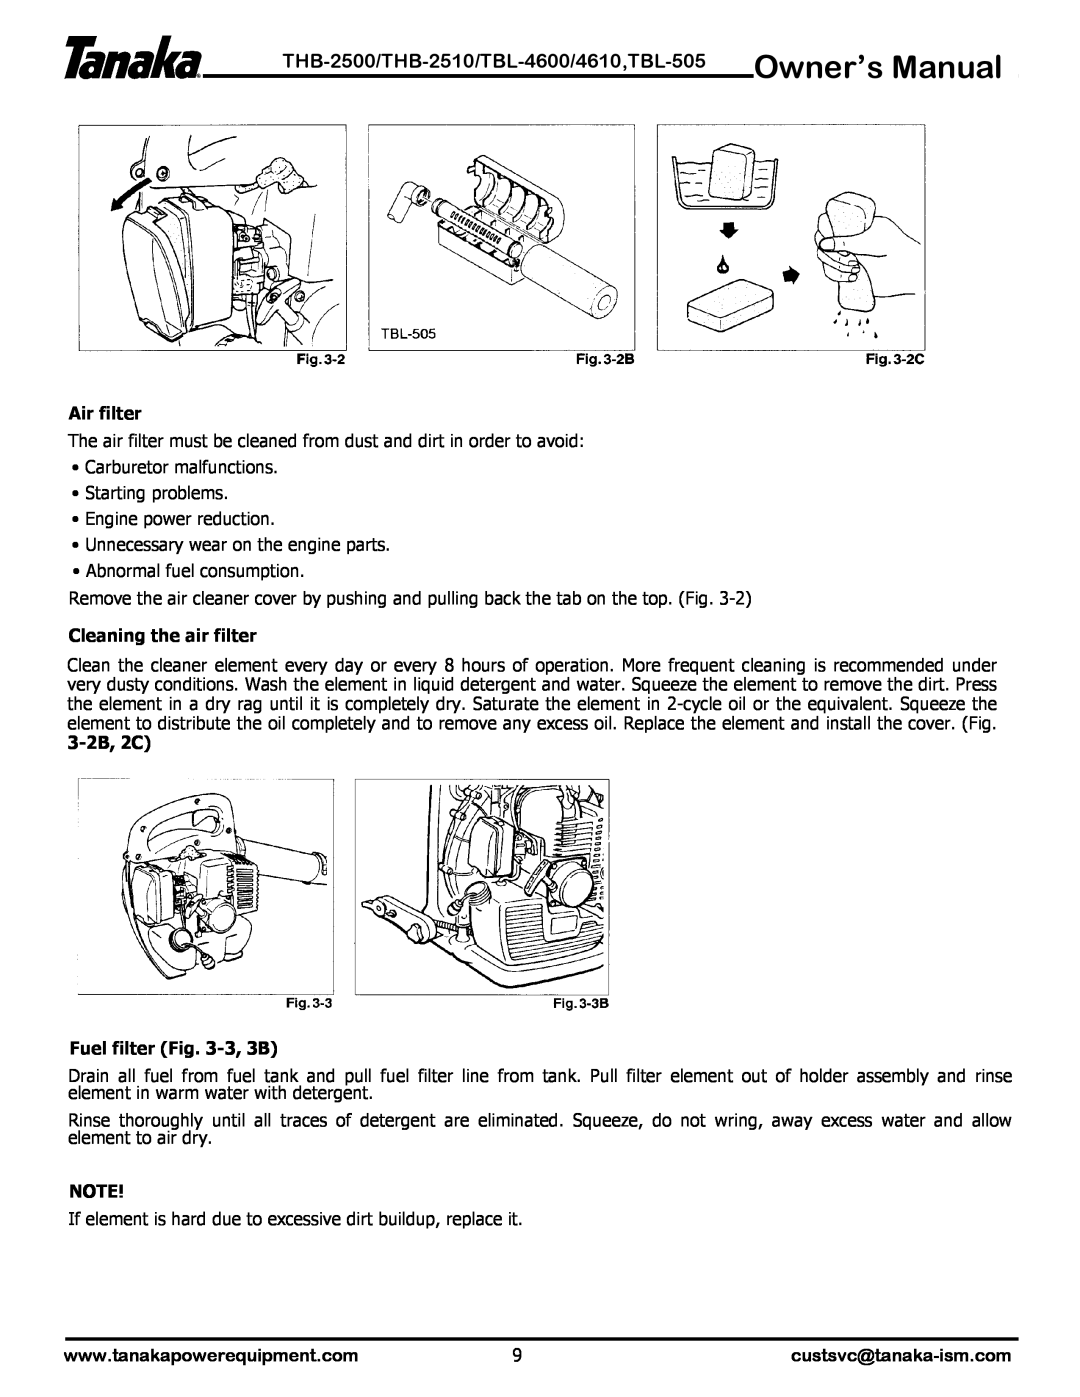 Tanaka manual THB-2500/THB-2510/TBL-4600/4610,TBL-505, Air filter, Cleaning the air filter, 3-2B, 2C Fuel filter -3, 3B 